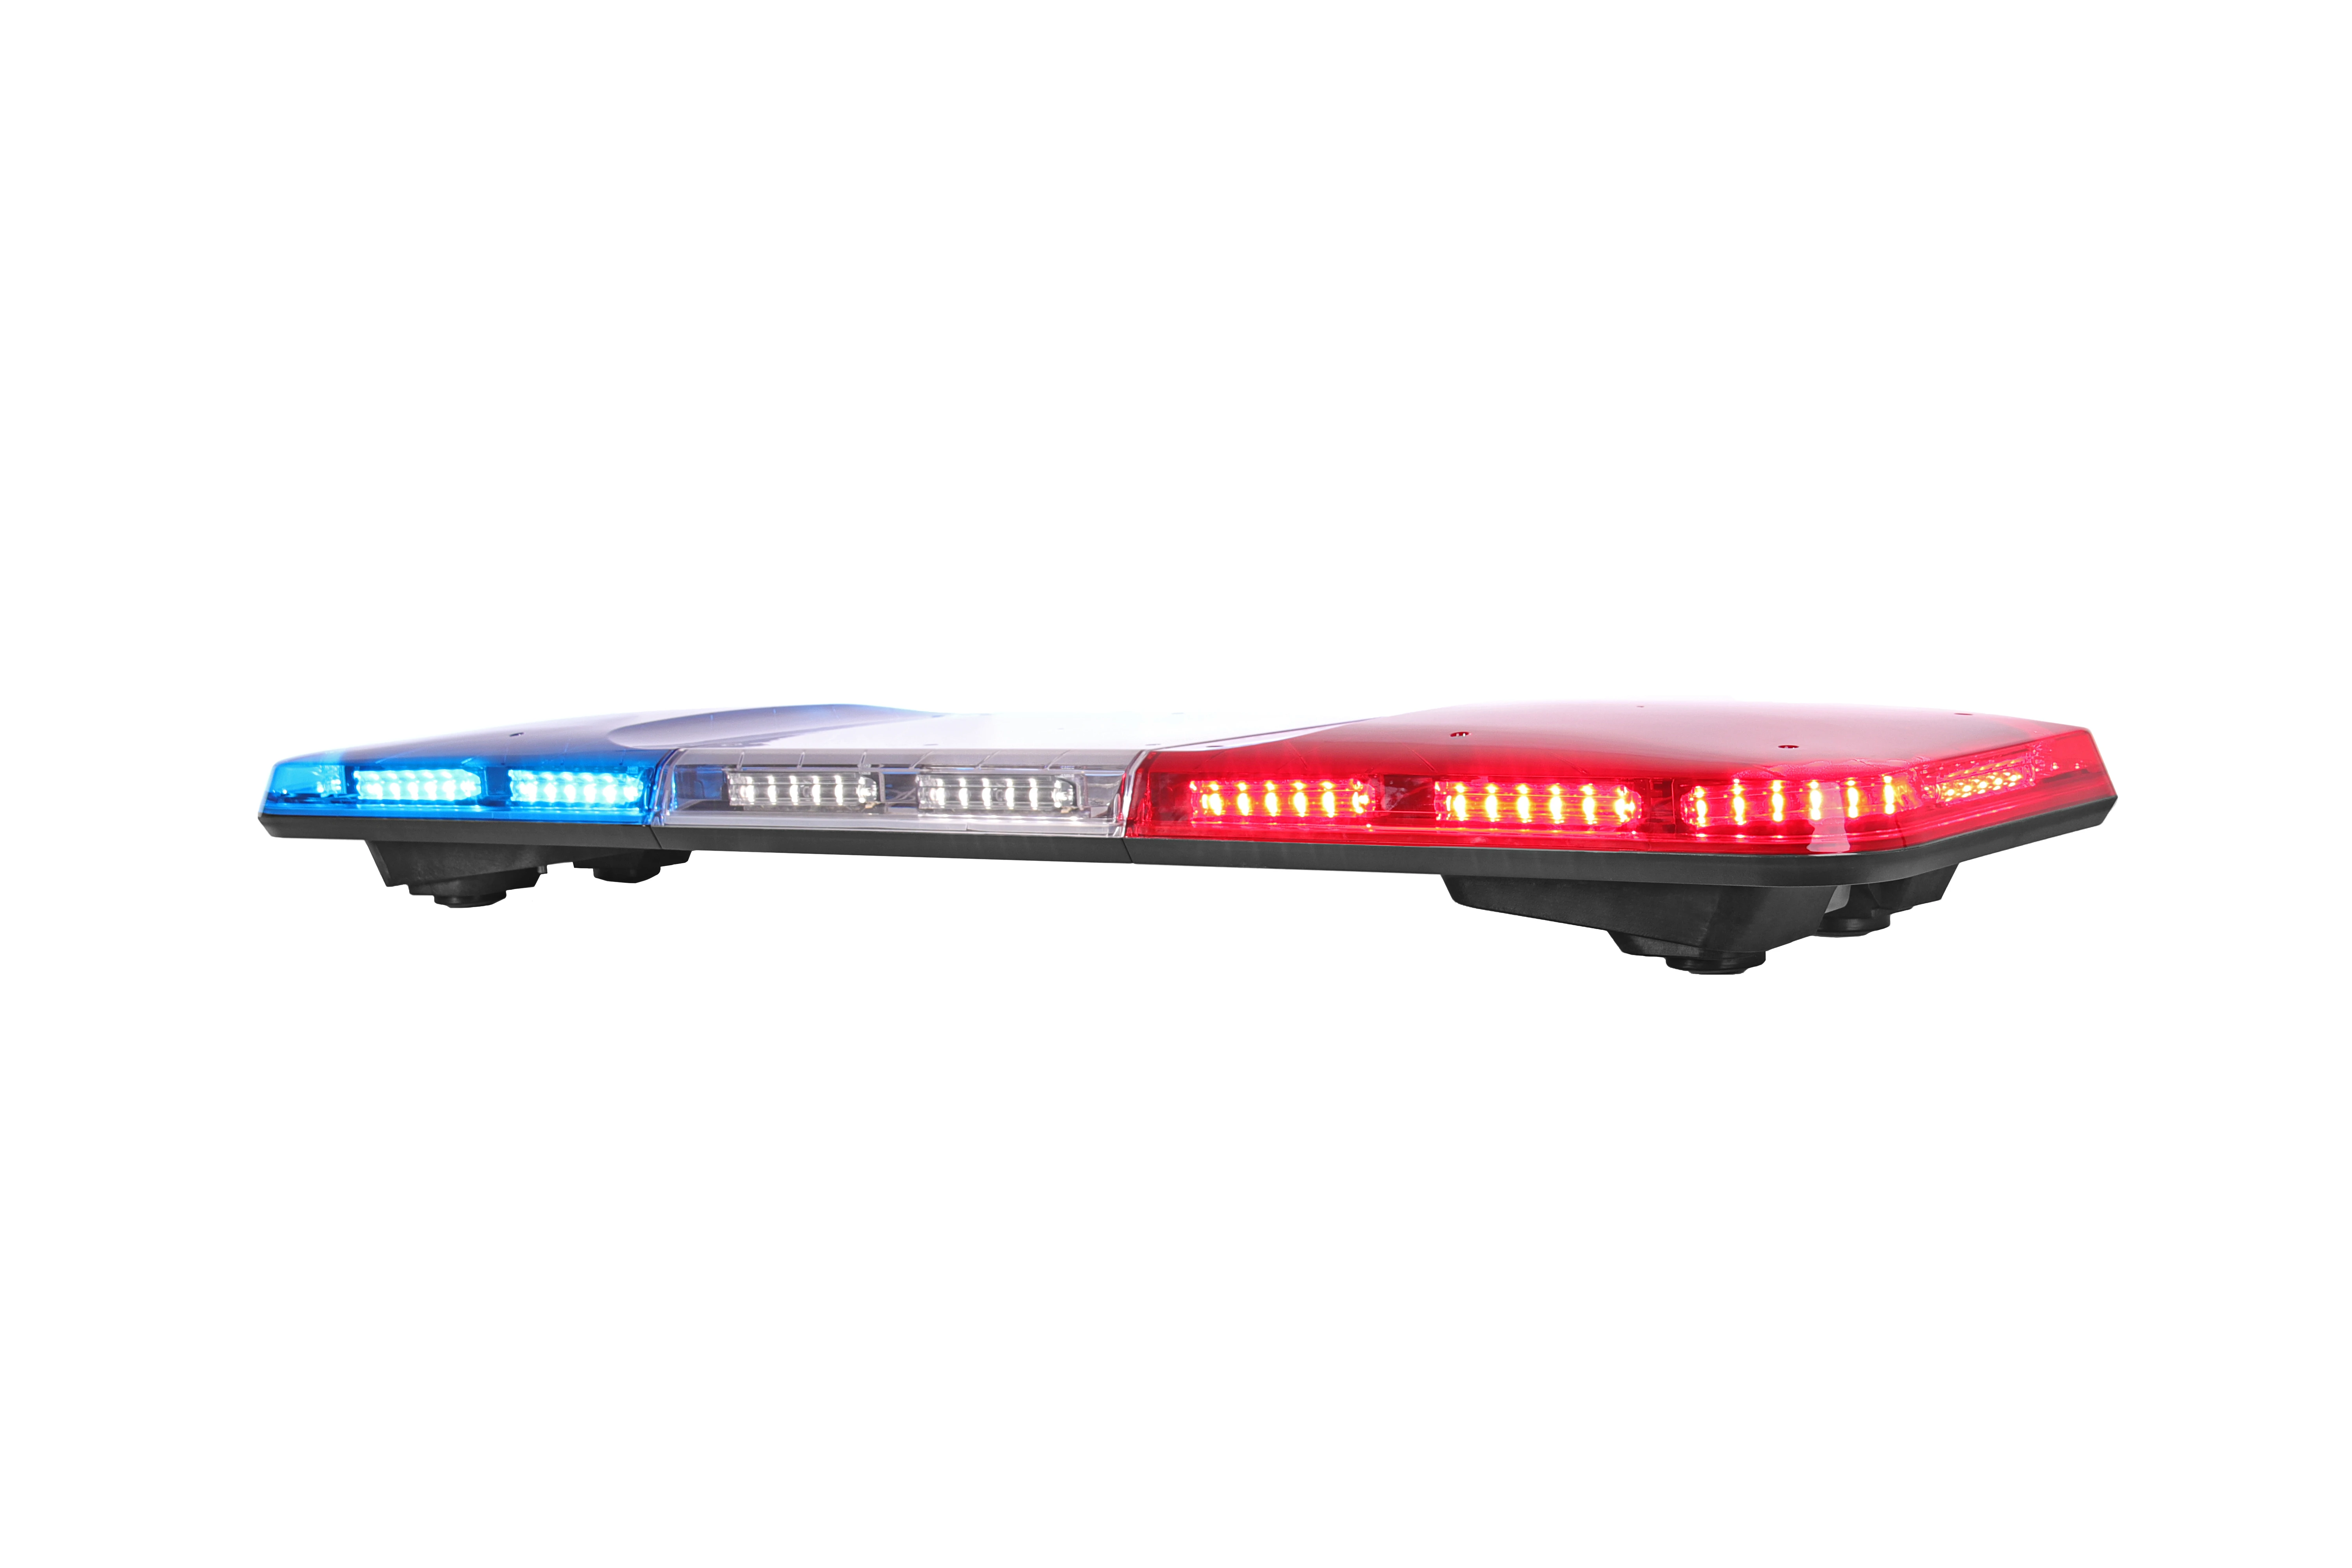 SENKEN police ambulance vehicle E-MARKR65  flashing traffic LED light bar